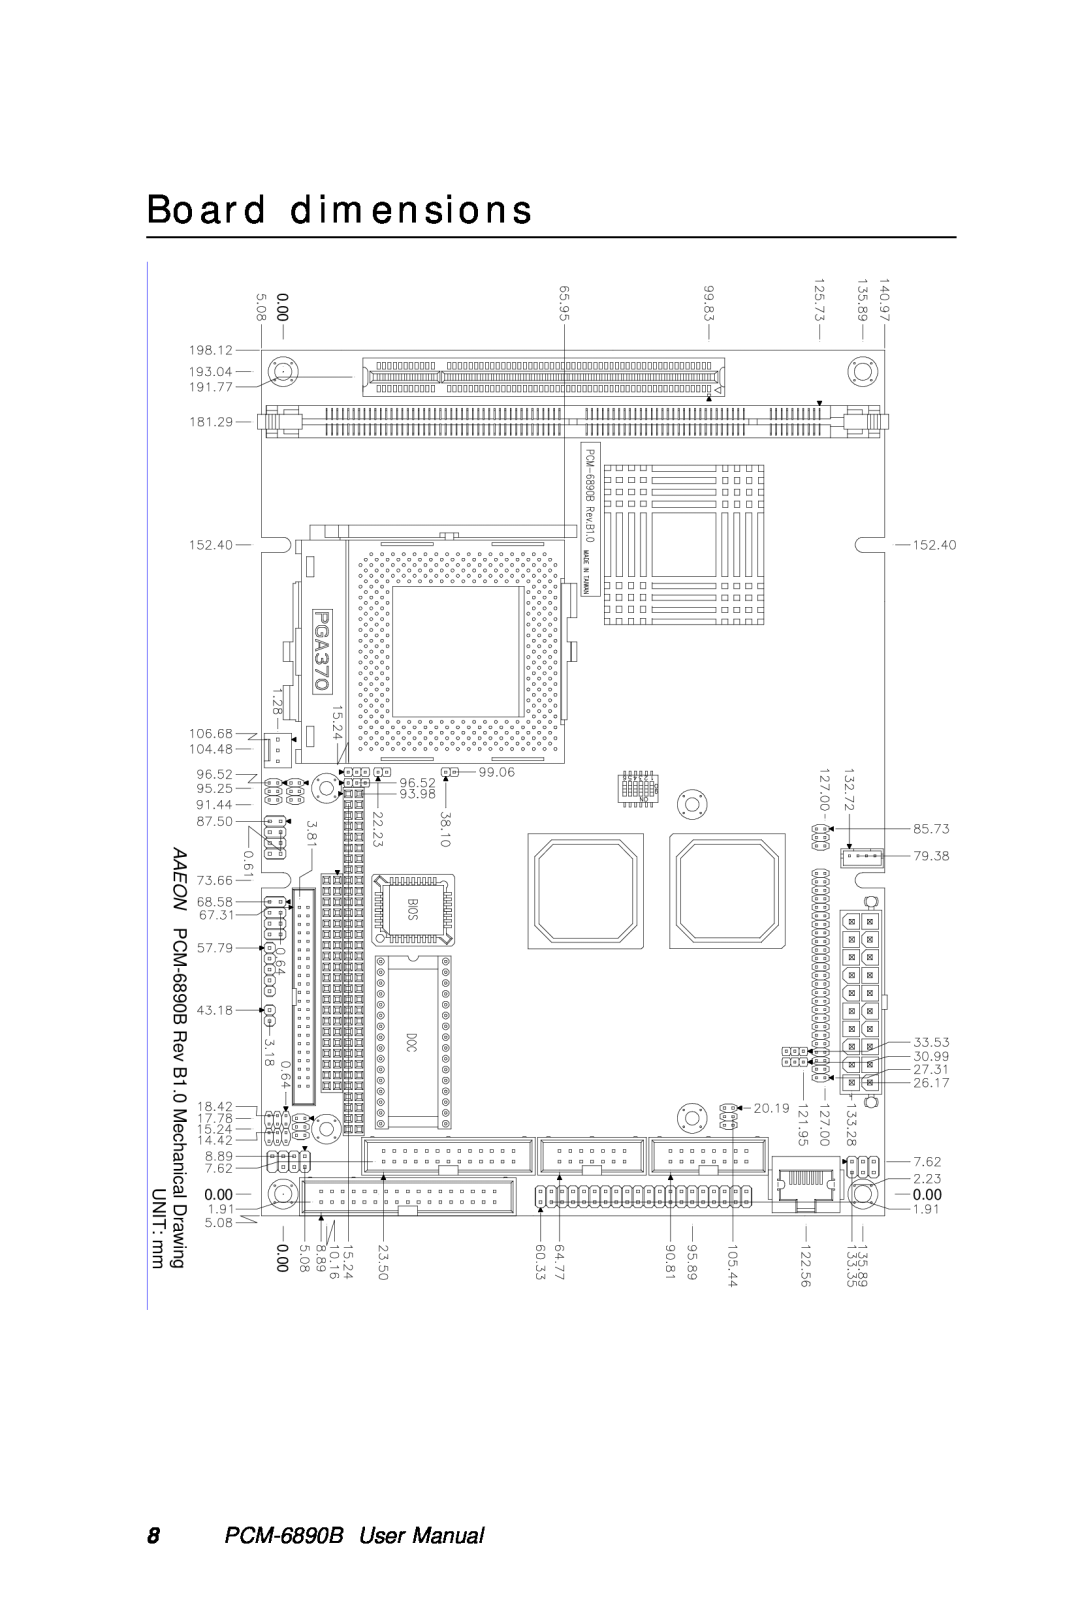 IBM manual Board dimensions, PCM-6890B User Manual, AAEON PCM-6890B Rev B1.0 Mechanical Drawing UNIT mm 